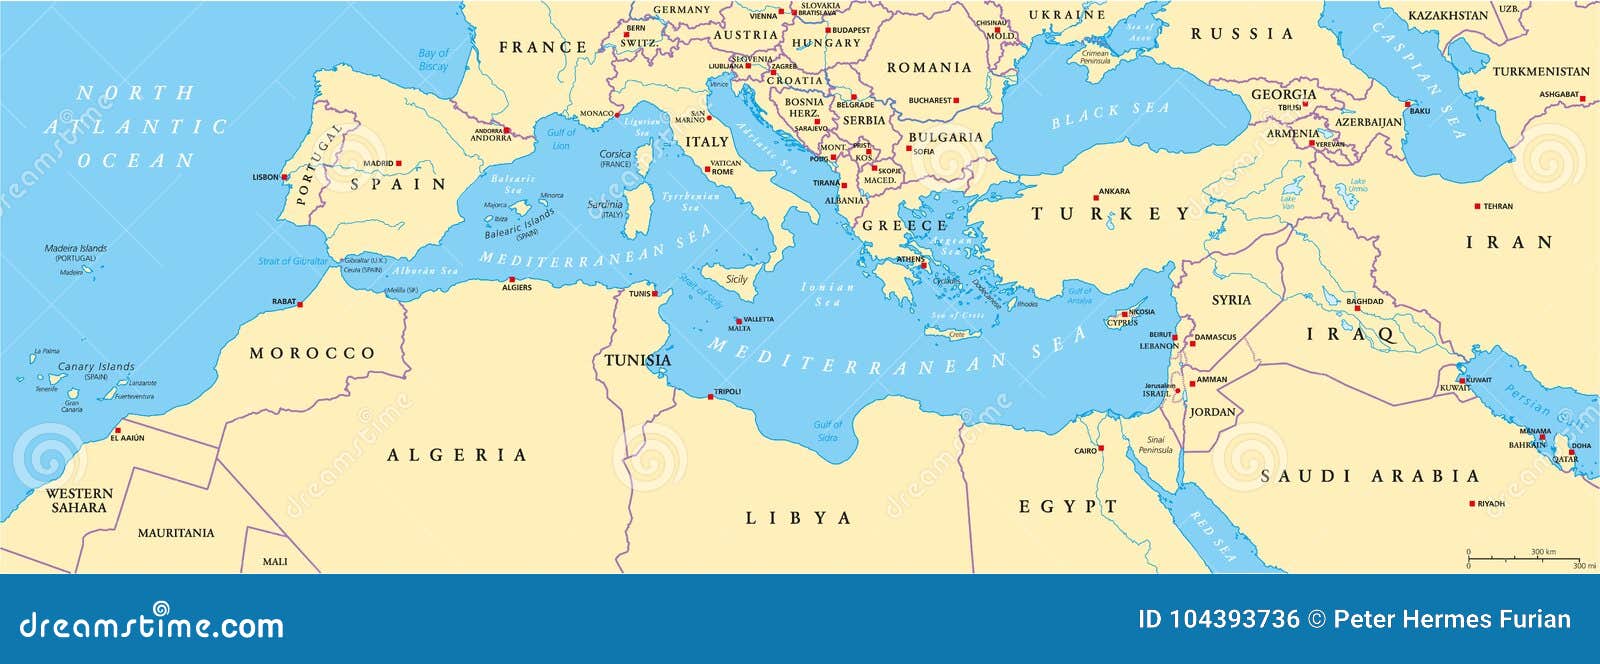 mediterranean basin political map